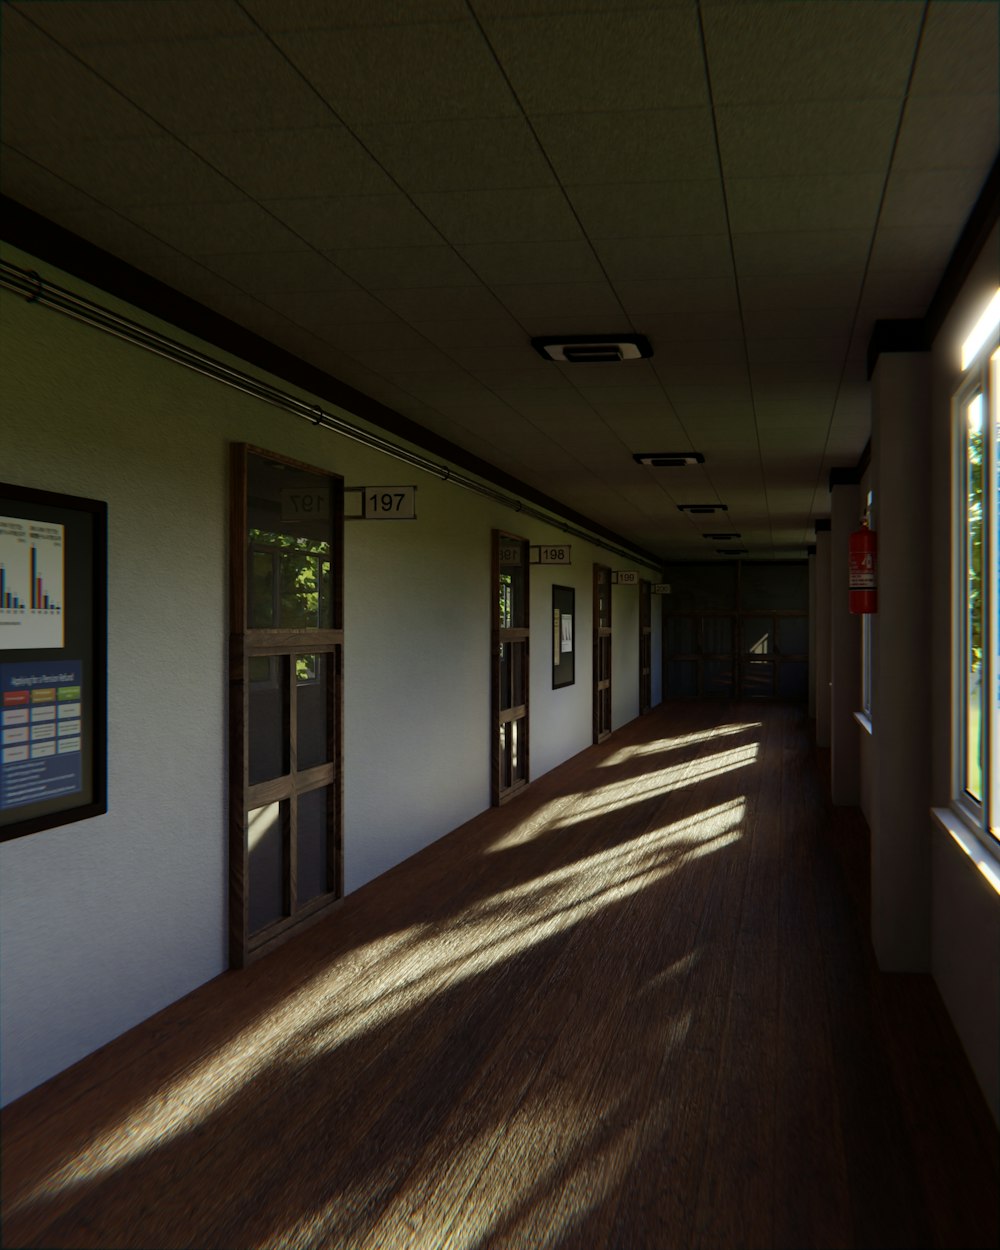 a long hallway with doors